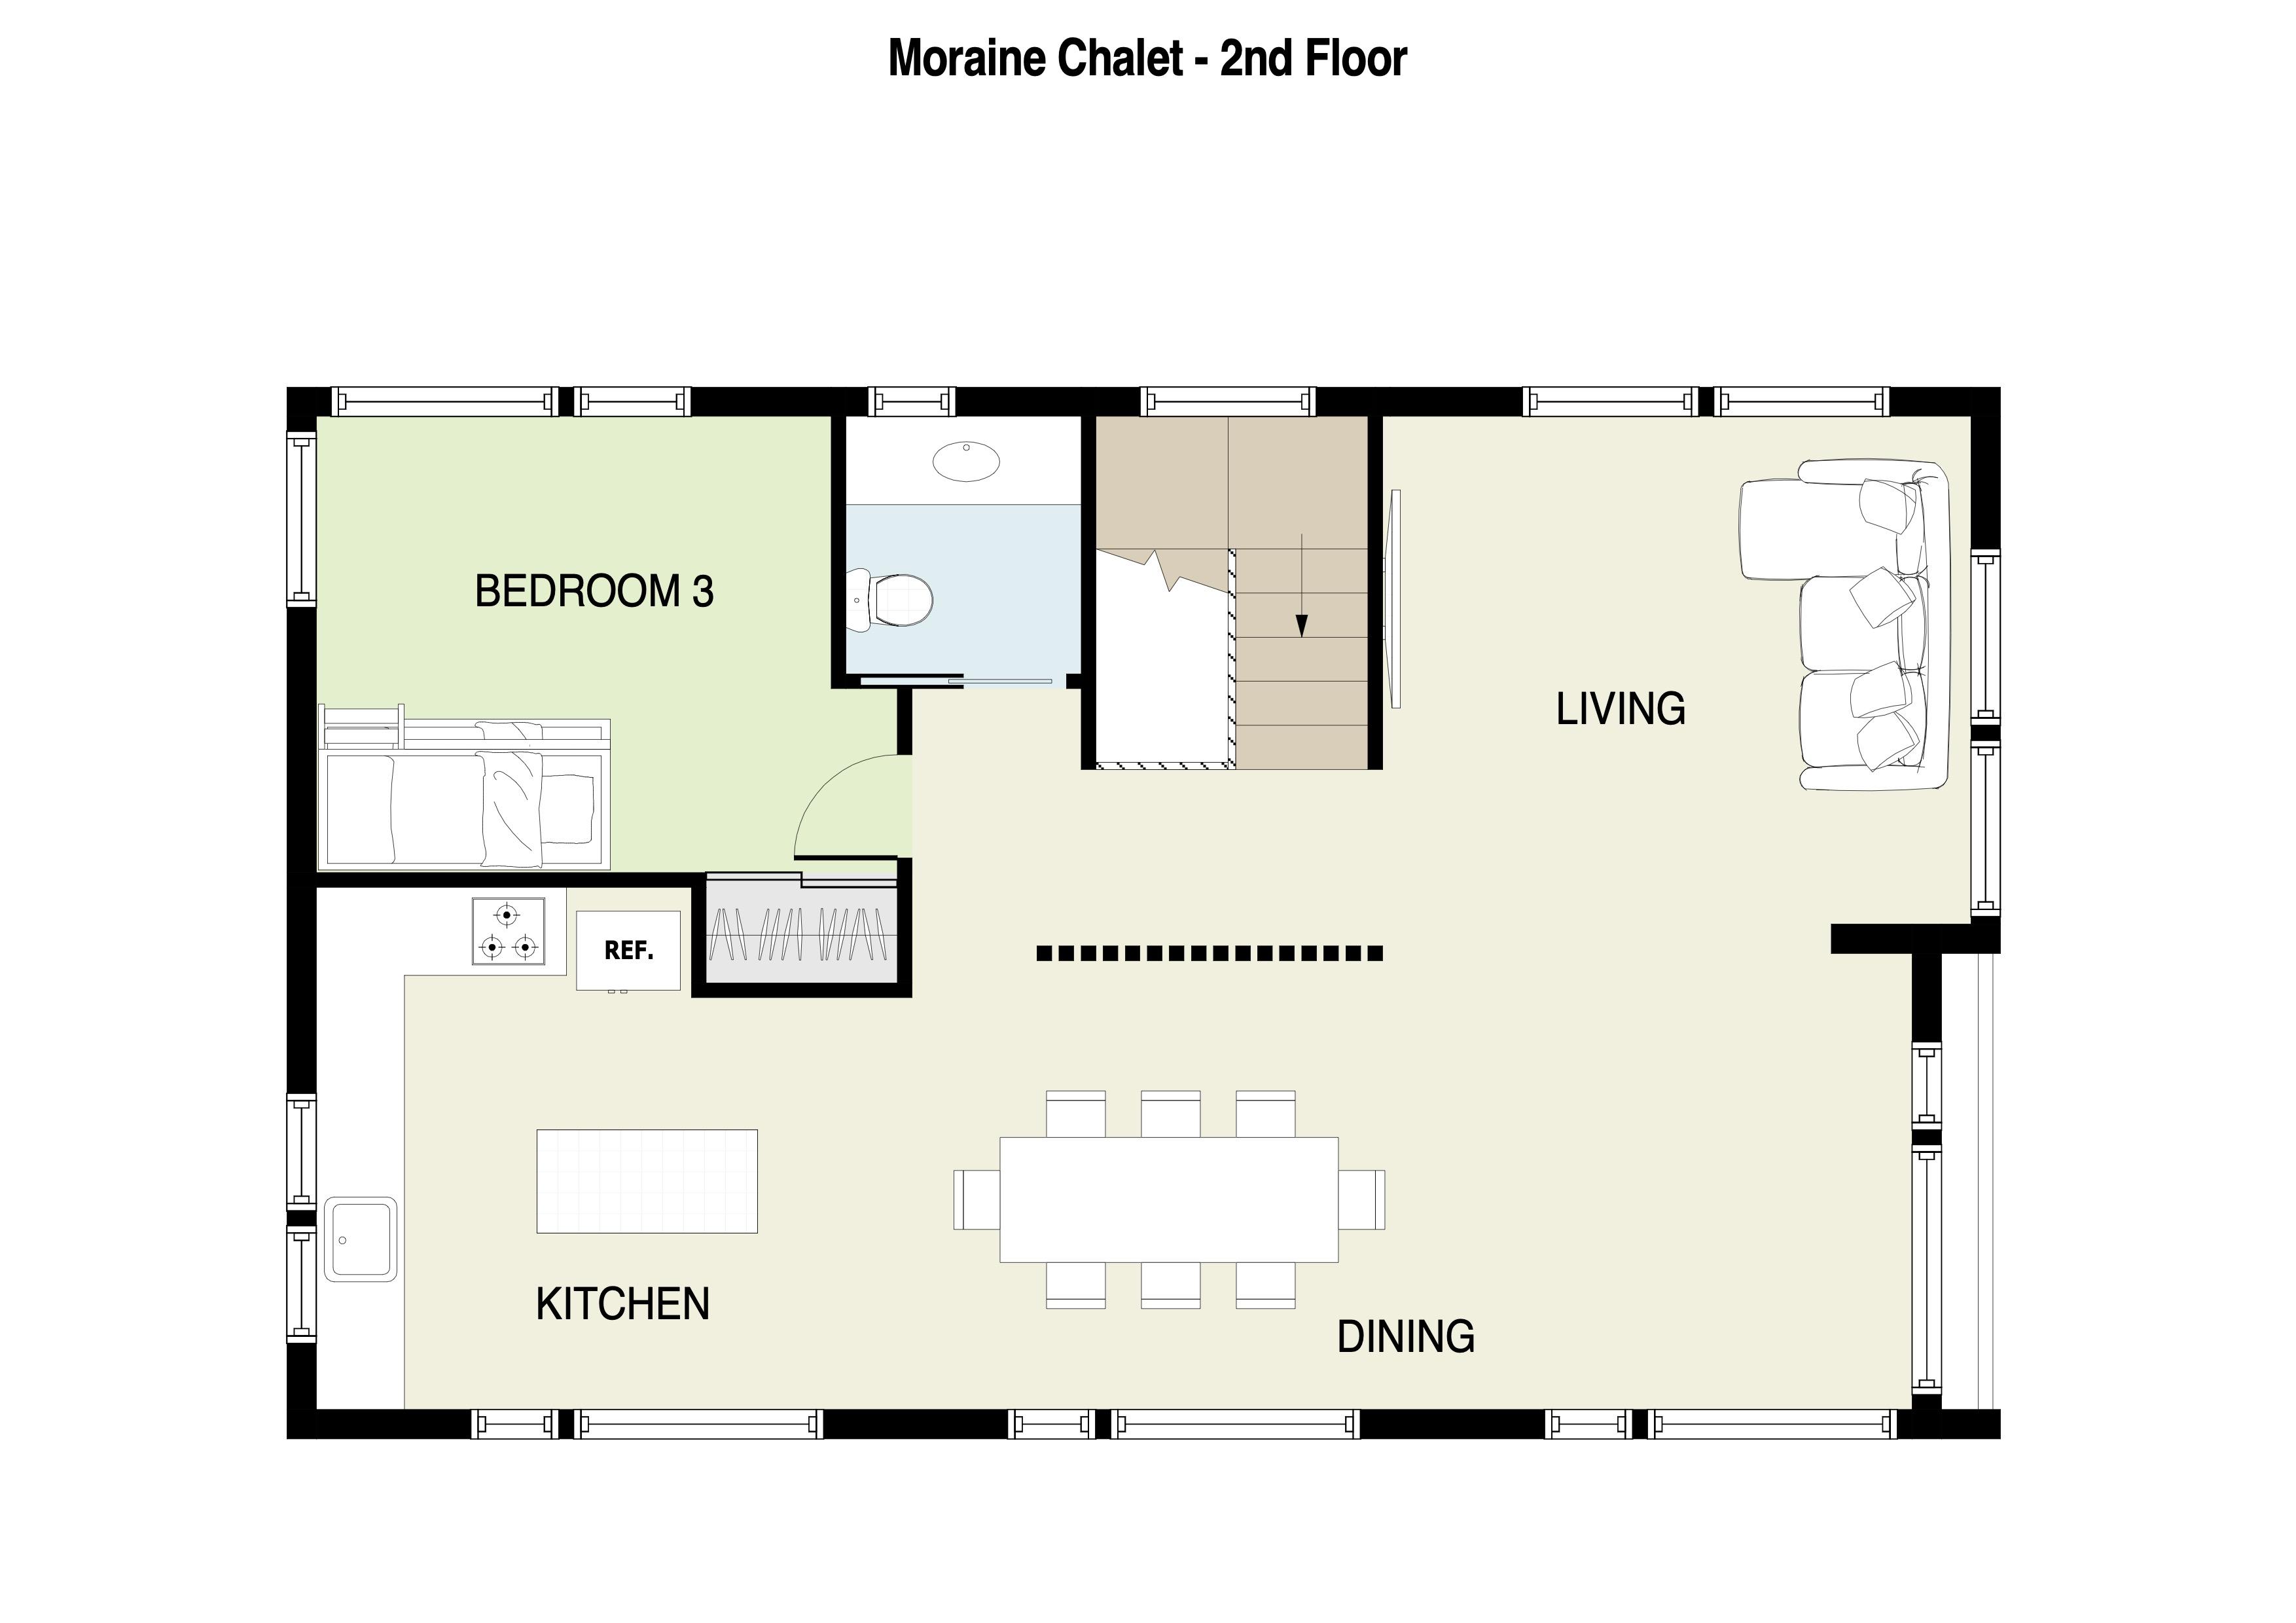 Moraine Chalet 2nd Floor Plan